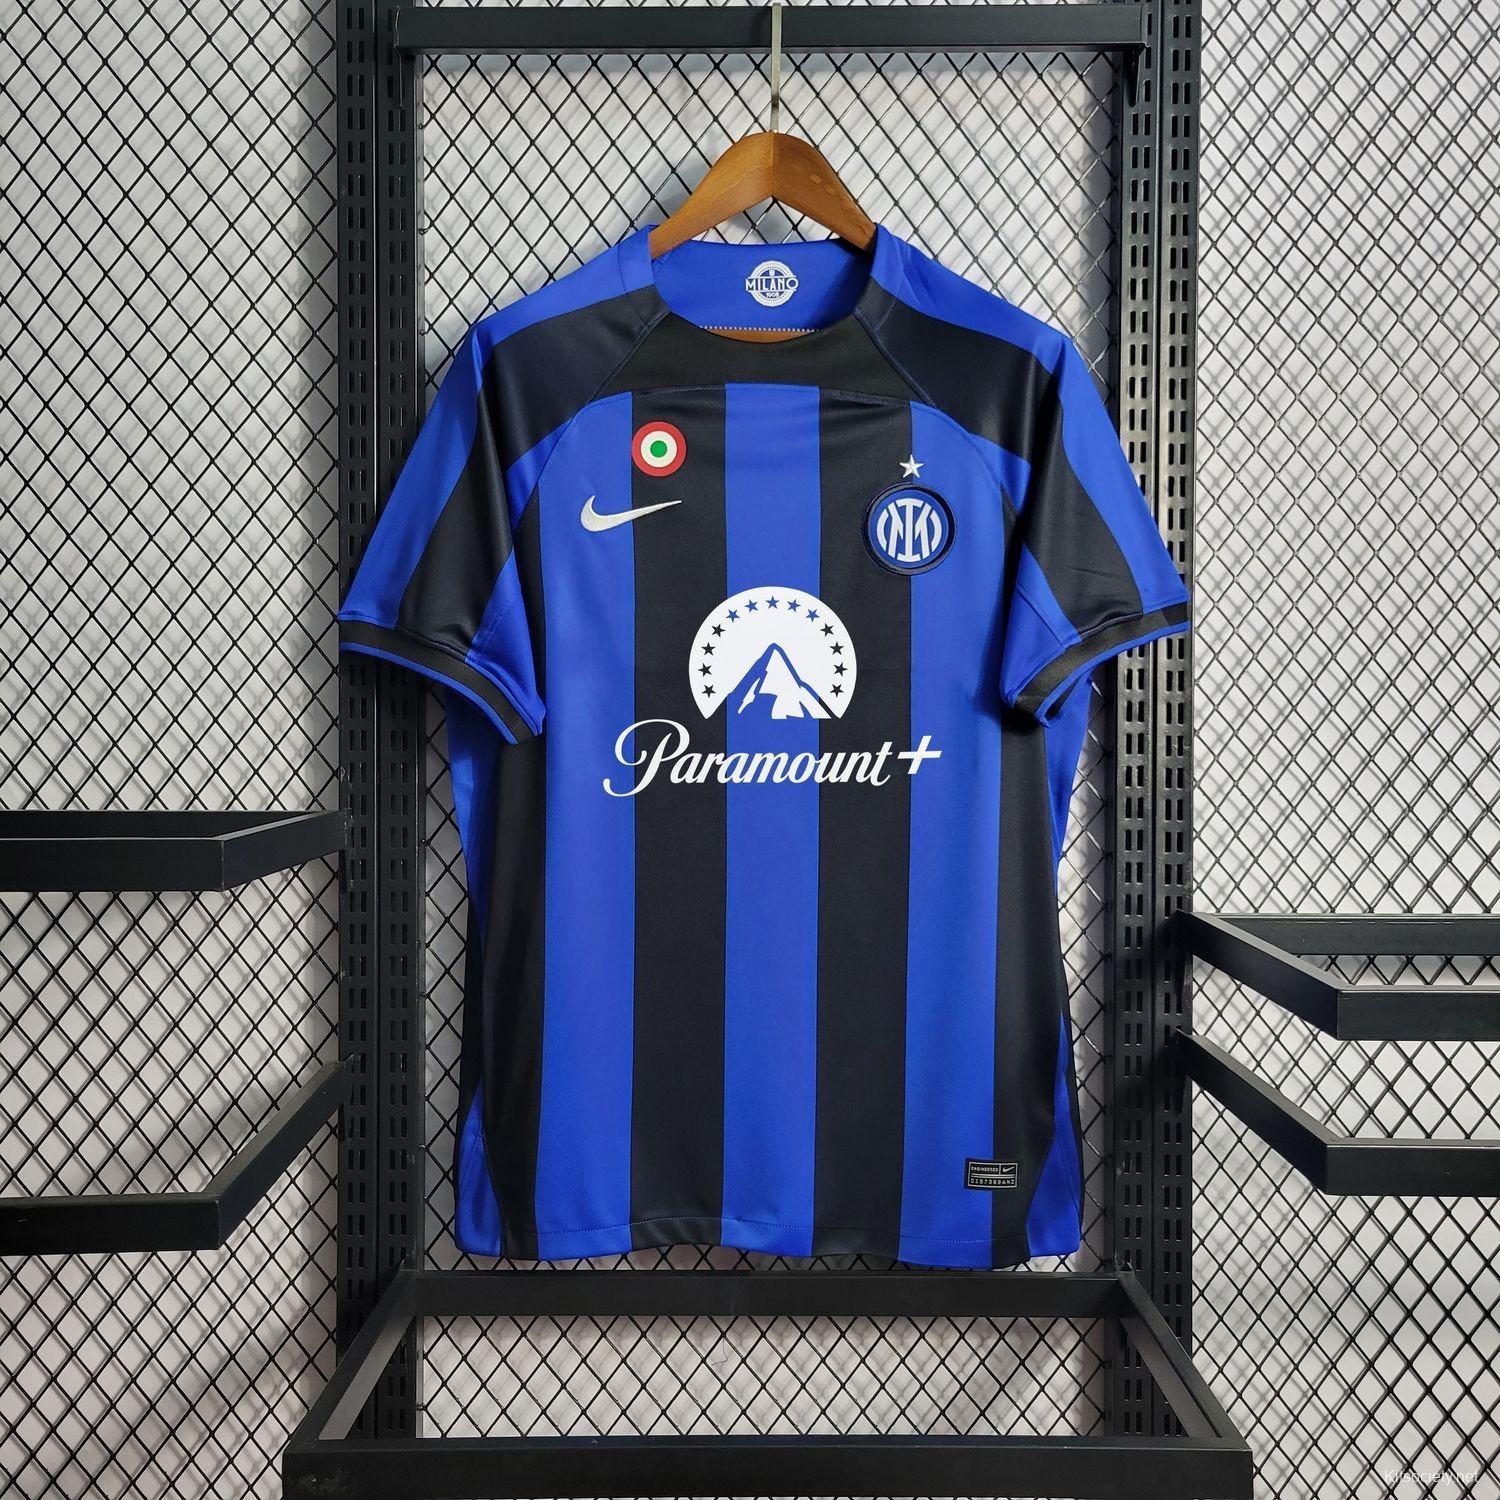 22/23 Inter Milan Home Jersey With Paramount Plus Sponsor - Kitsociety